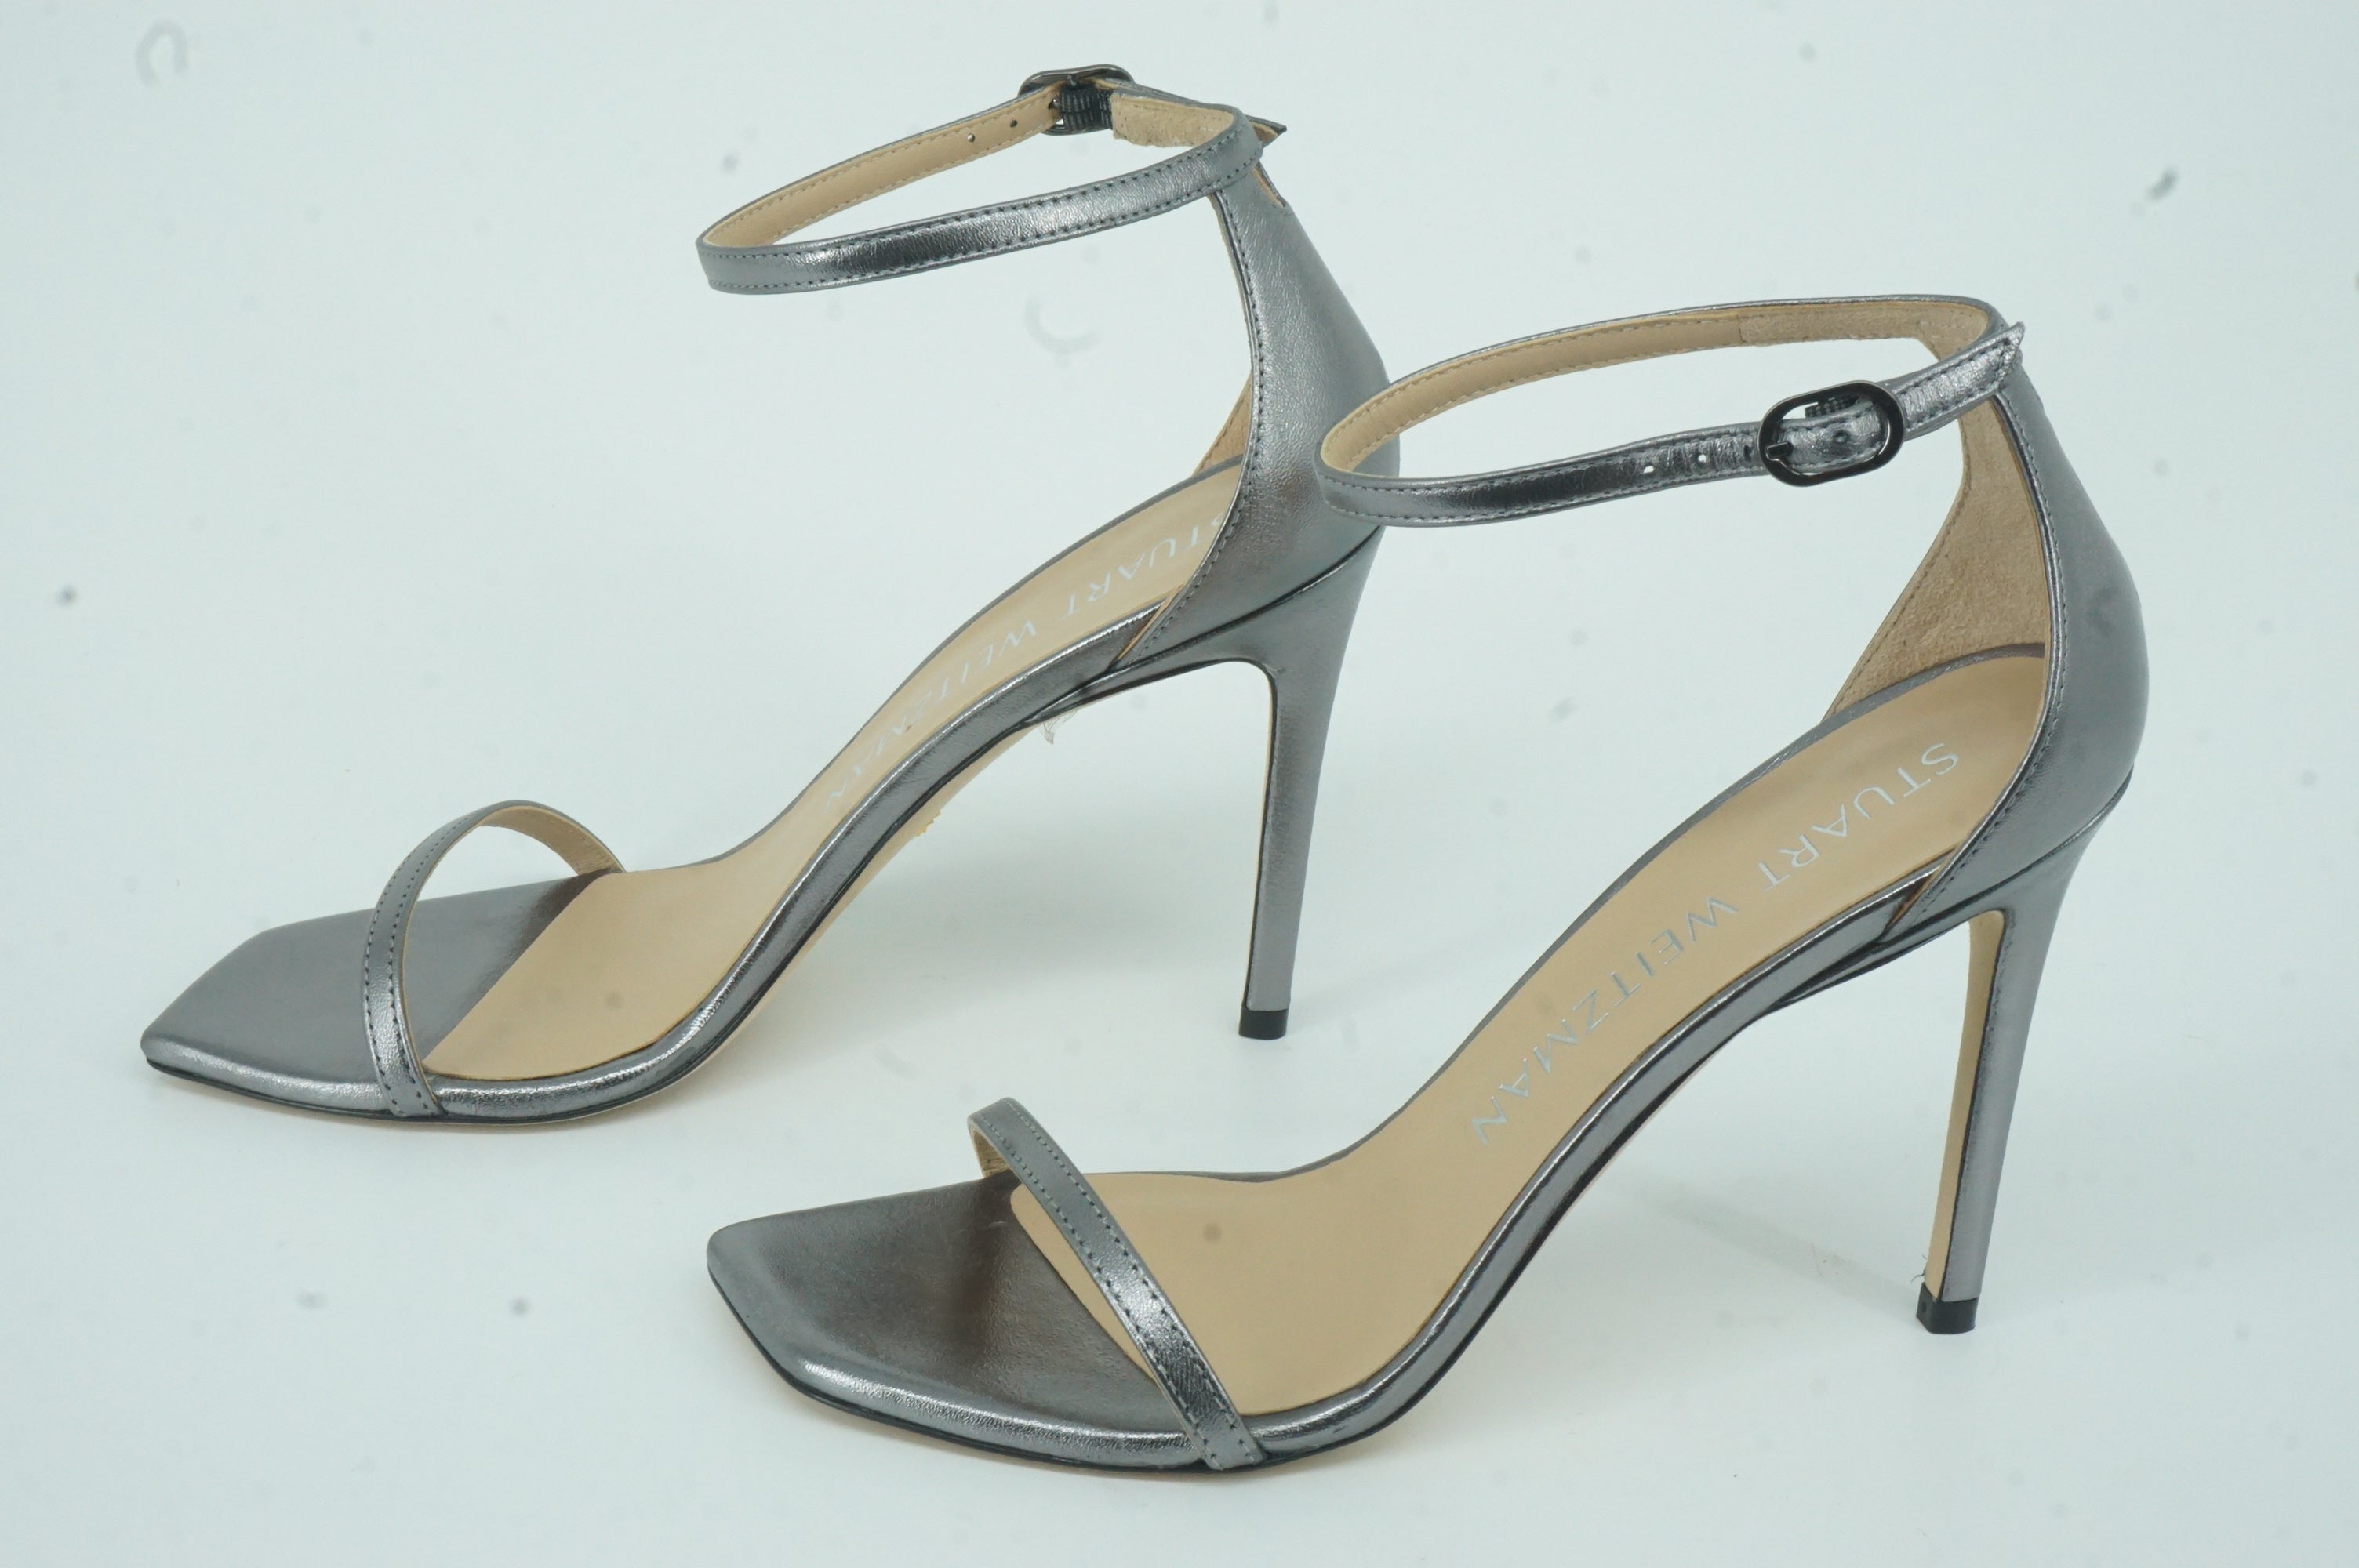 Stuart Weitzman Nudistcurve 100 Silver Ankle Strappy Sandals Size 8.5 $475